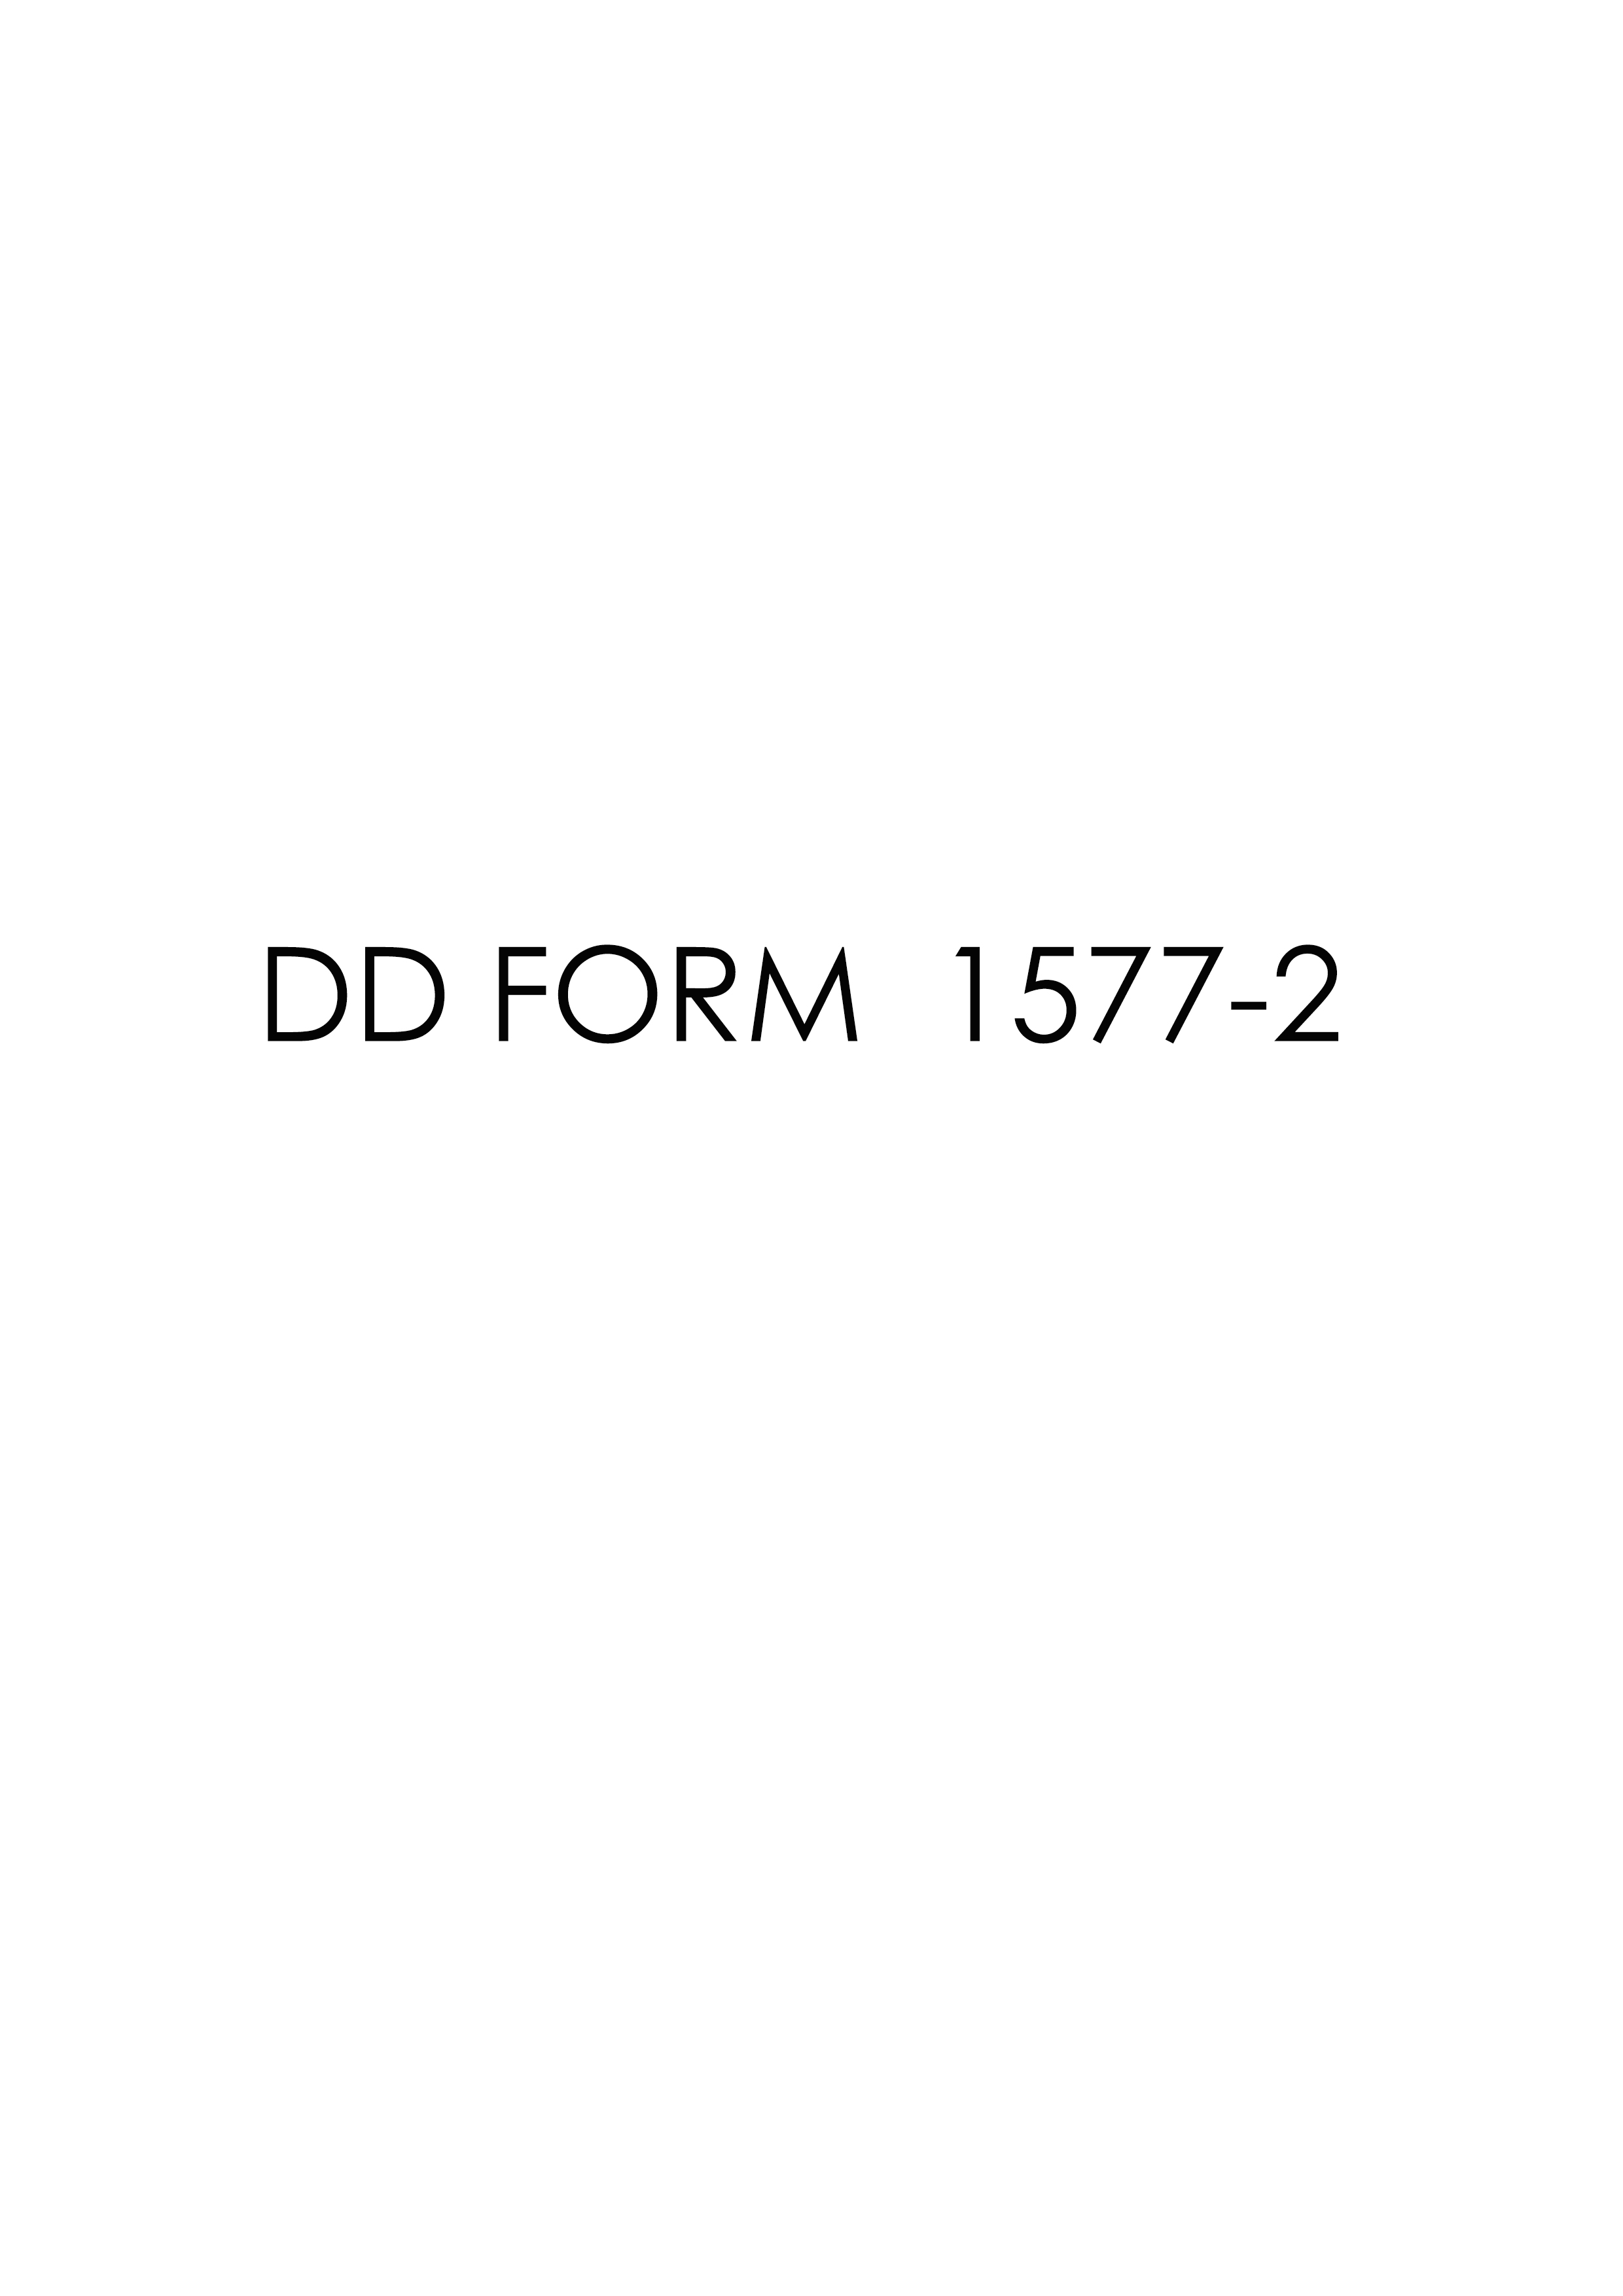 Download dd form 1577-2